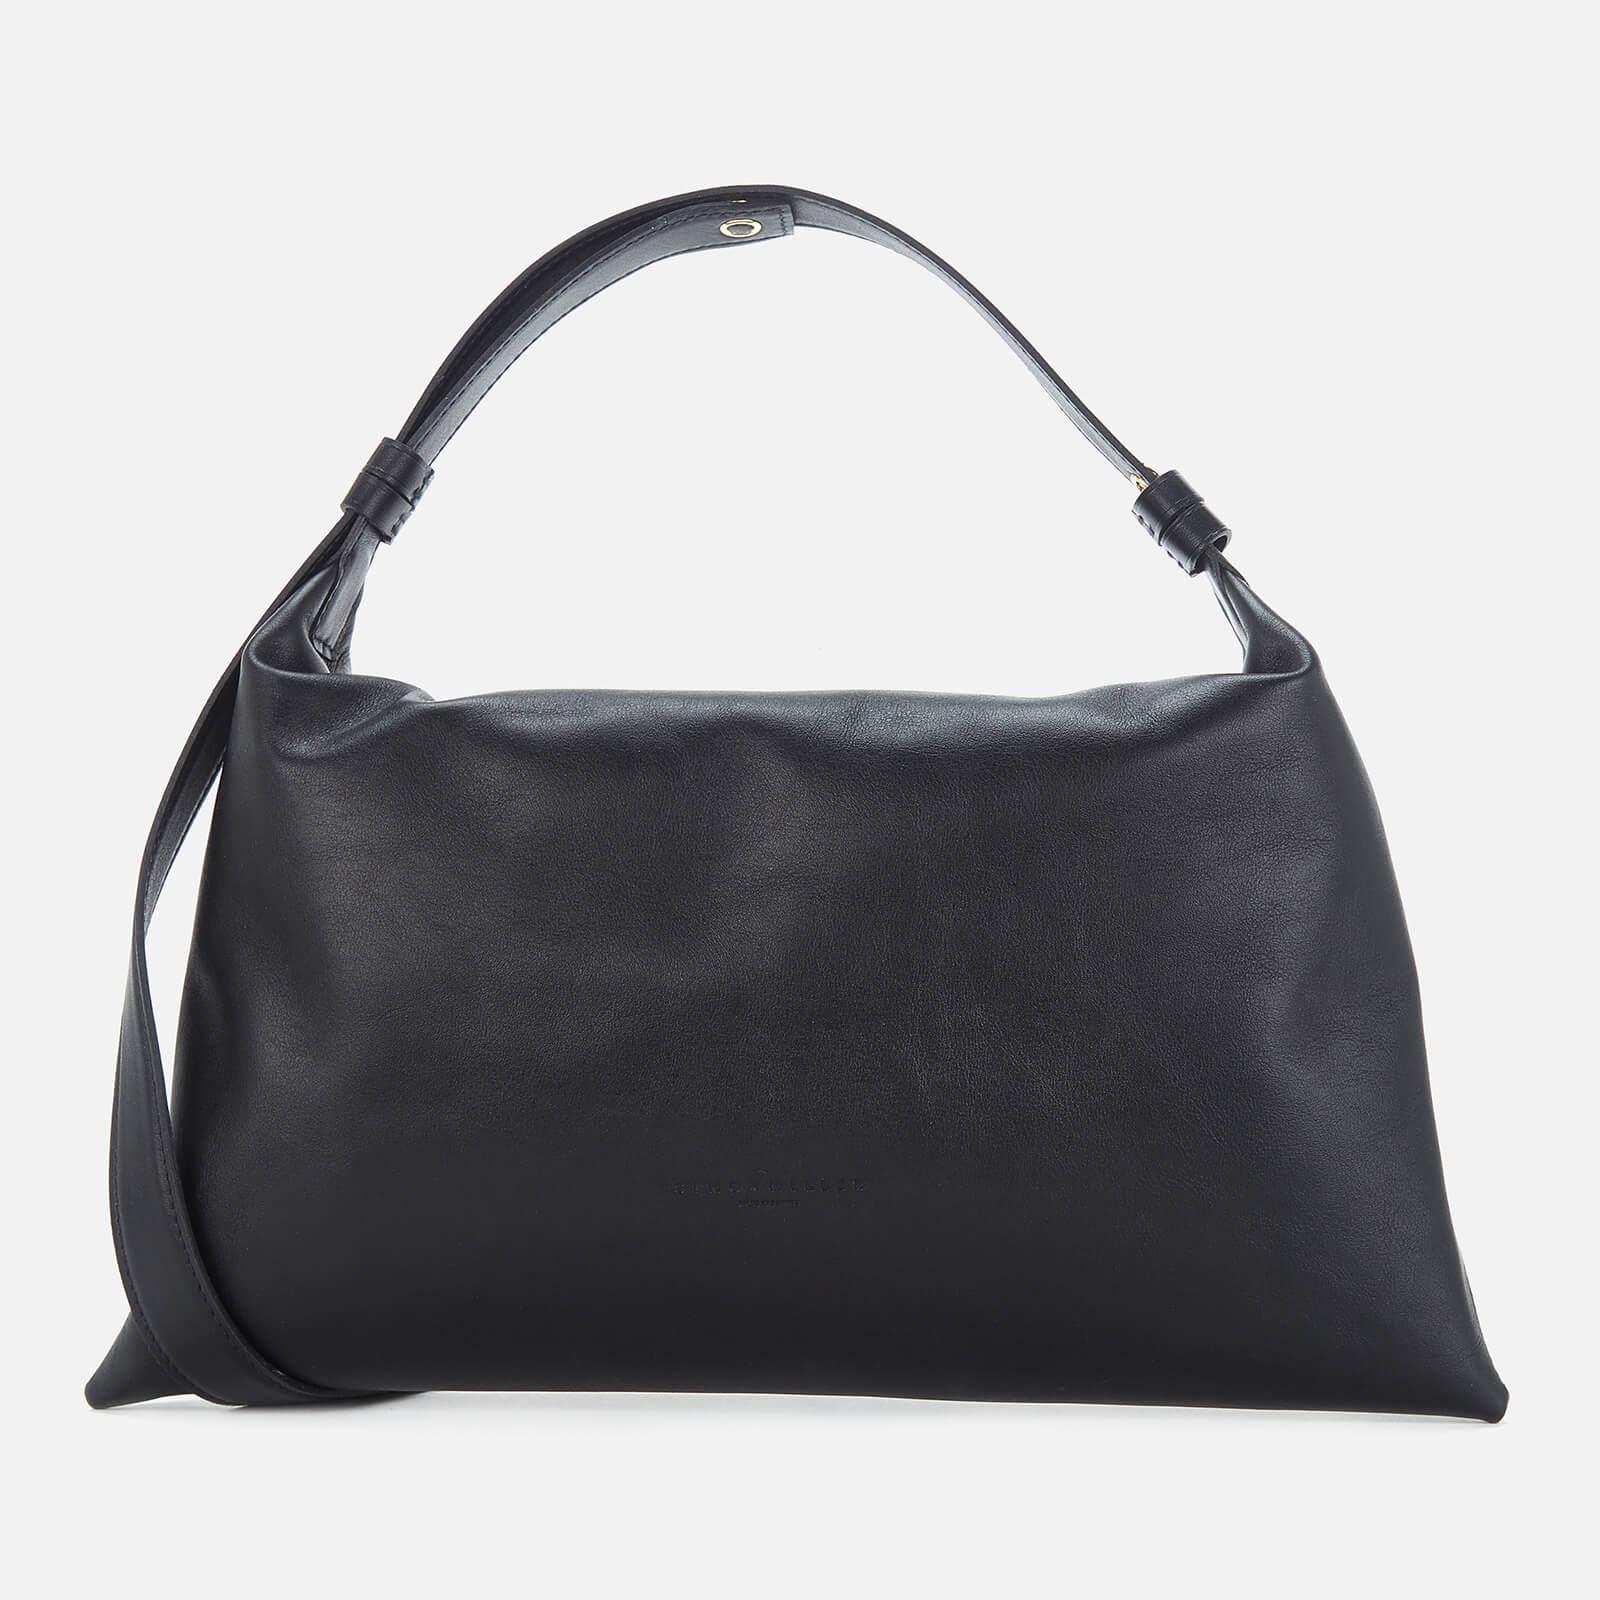 Simon Miller Leather Puffin Shoulder Bag in Black - Lyst